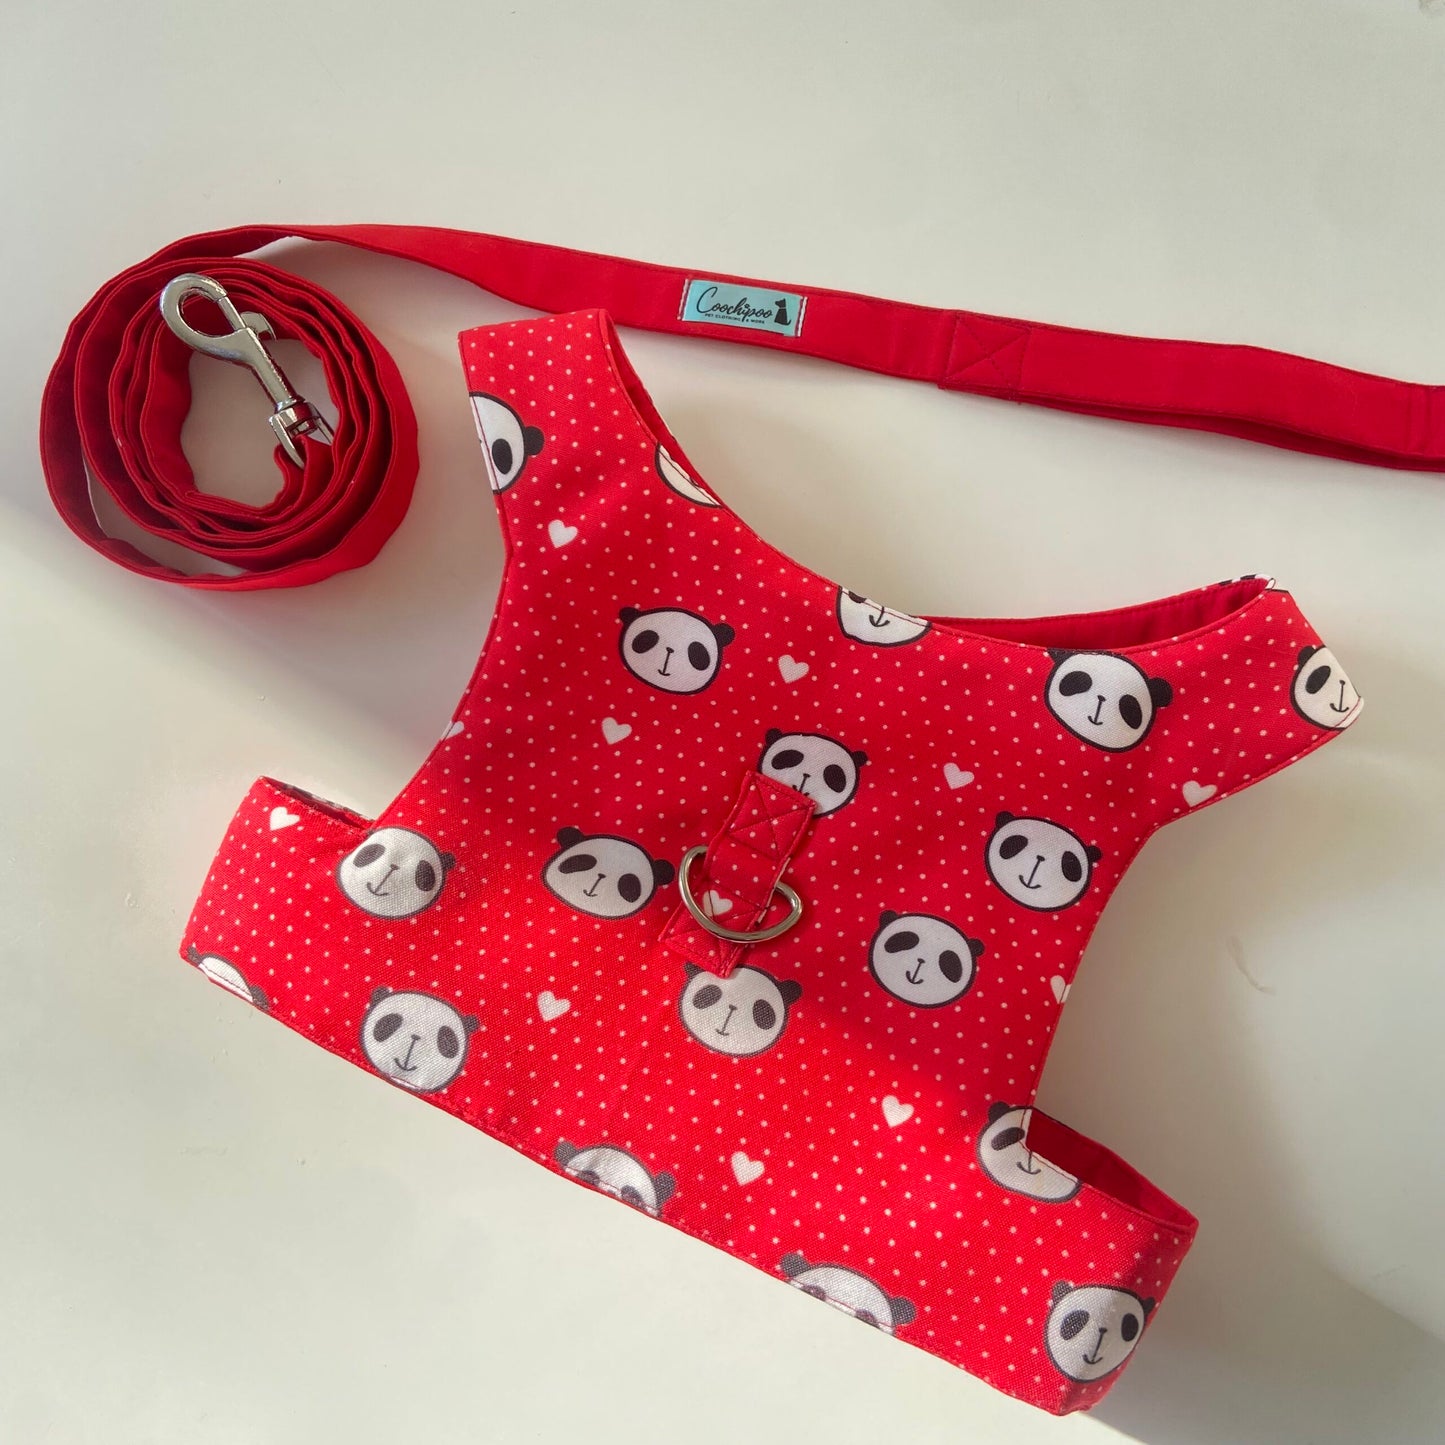 Coochipoo Ruby Teddy harness & leash for Dogs